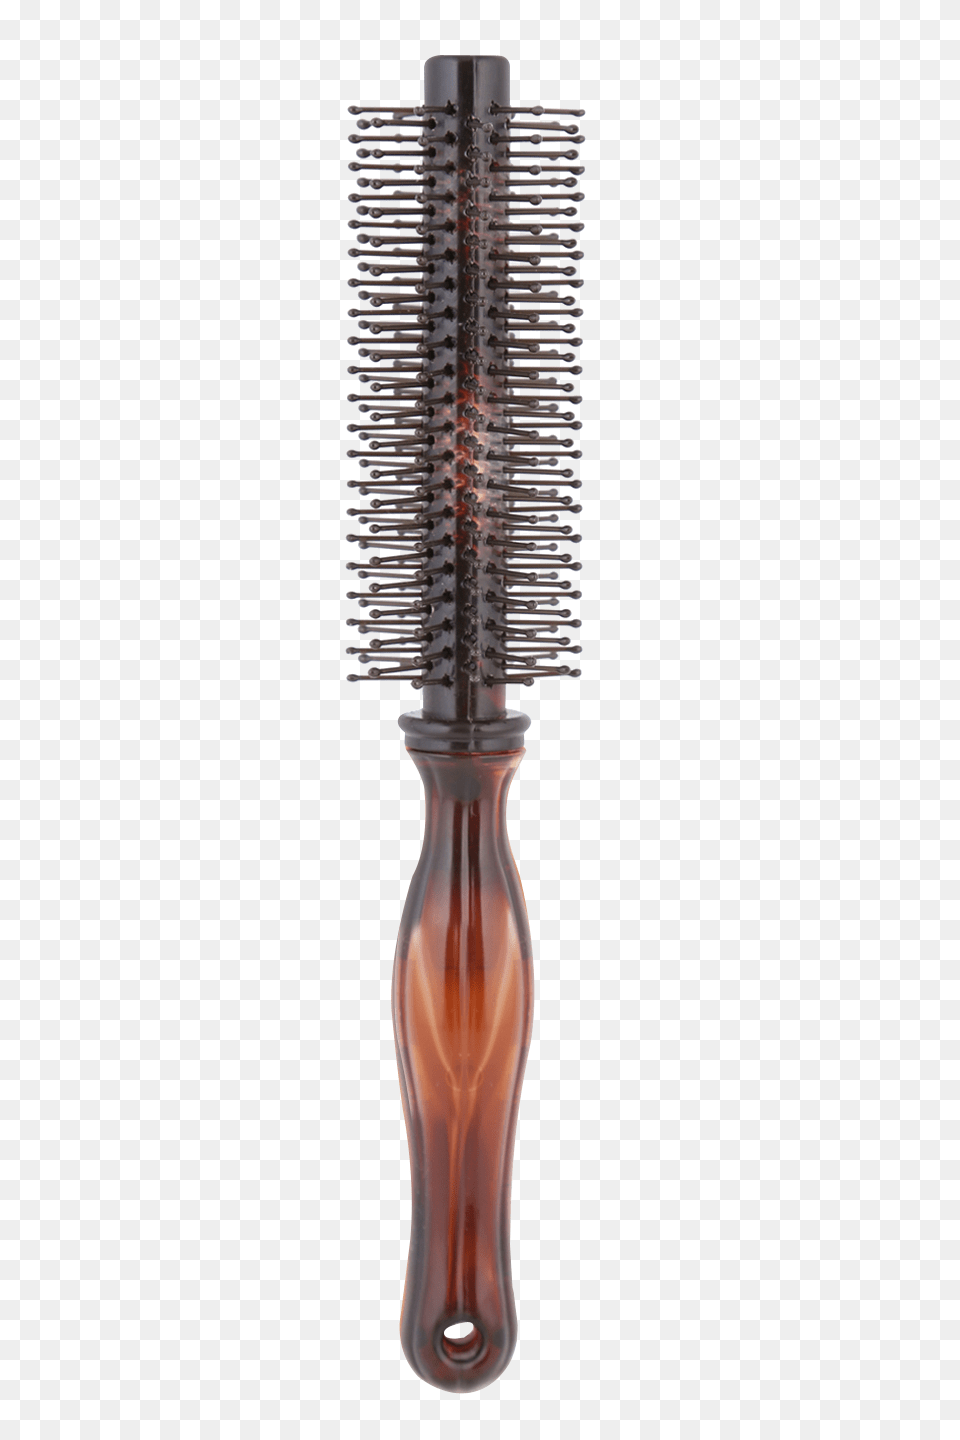 Pngpix Com Round Hair Brush Transparent Image, Device, Tool, Smoke Pipe Free Png